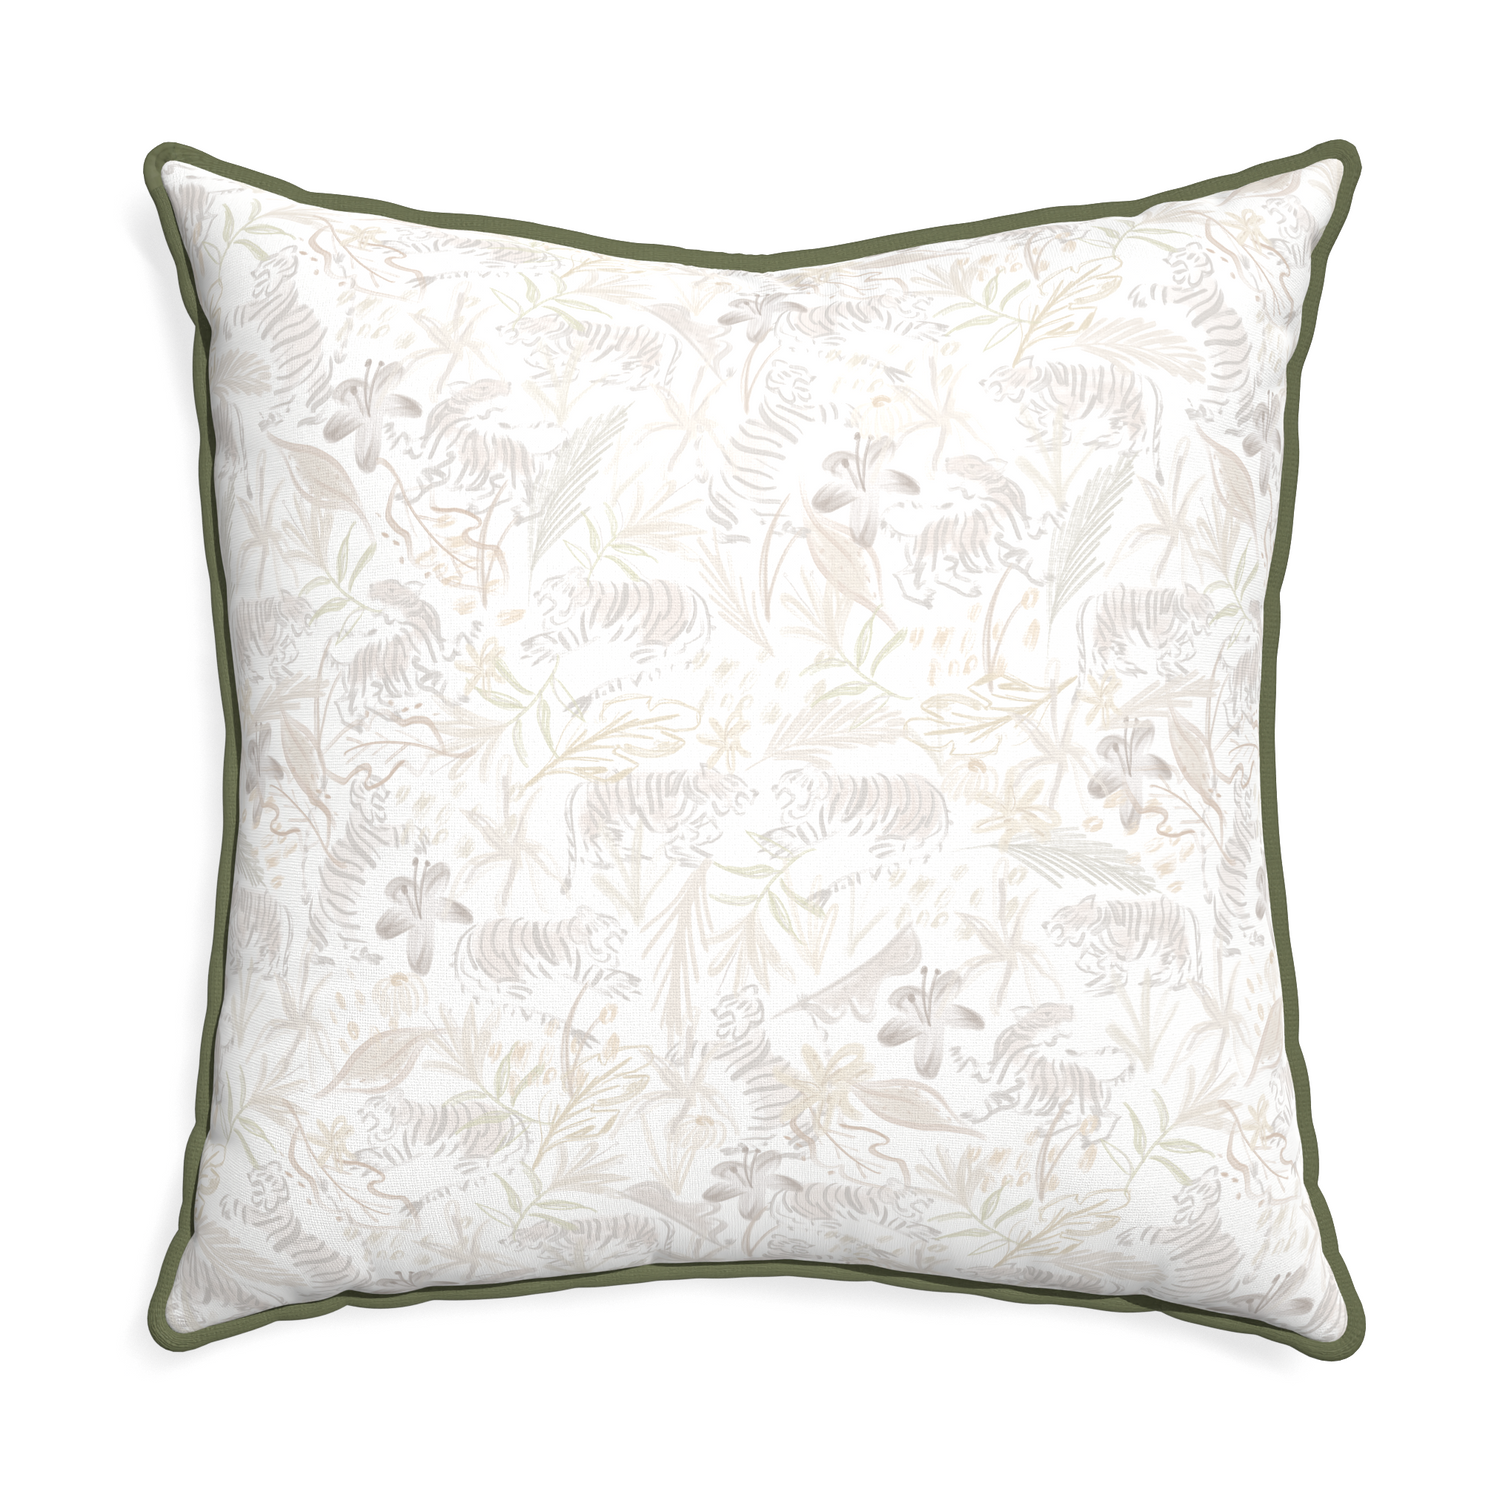 Euro-sham frida sand custom pillow with f piping on white background